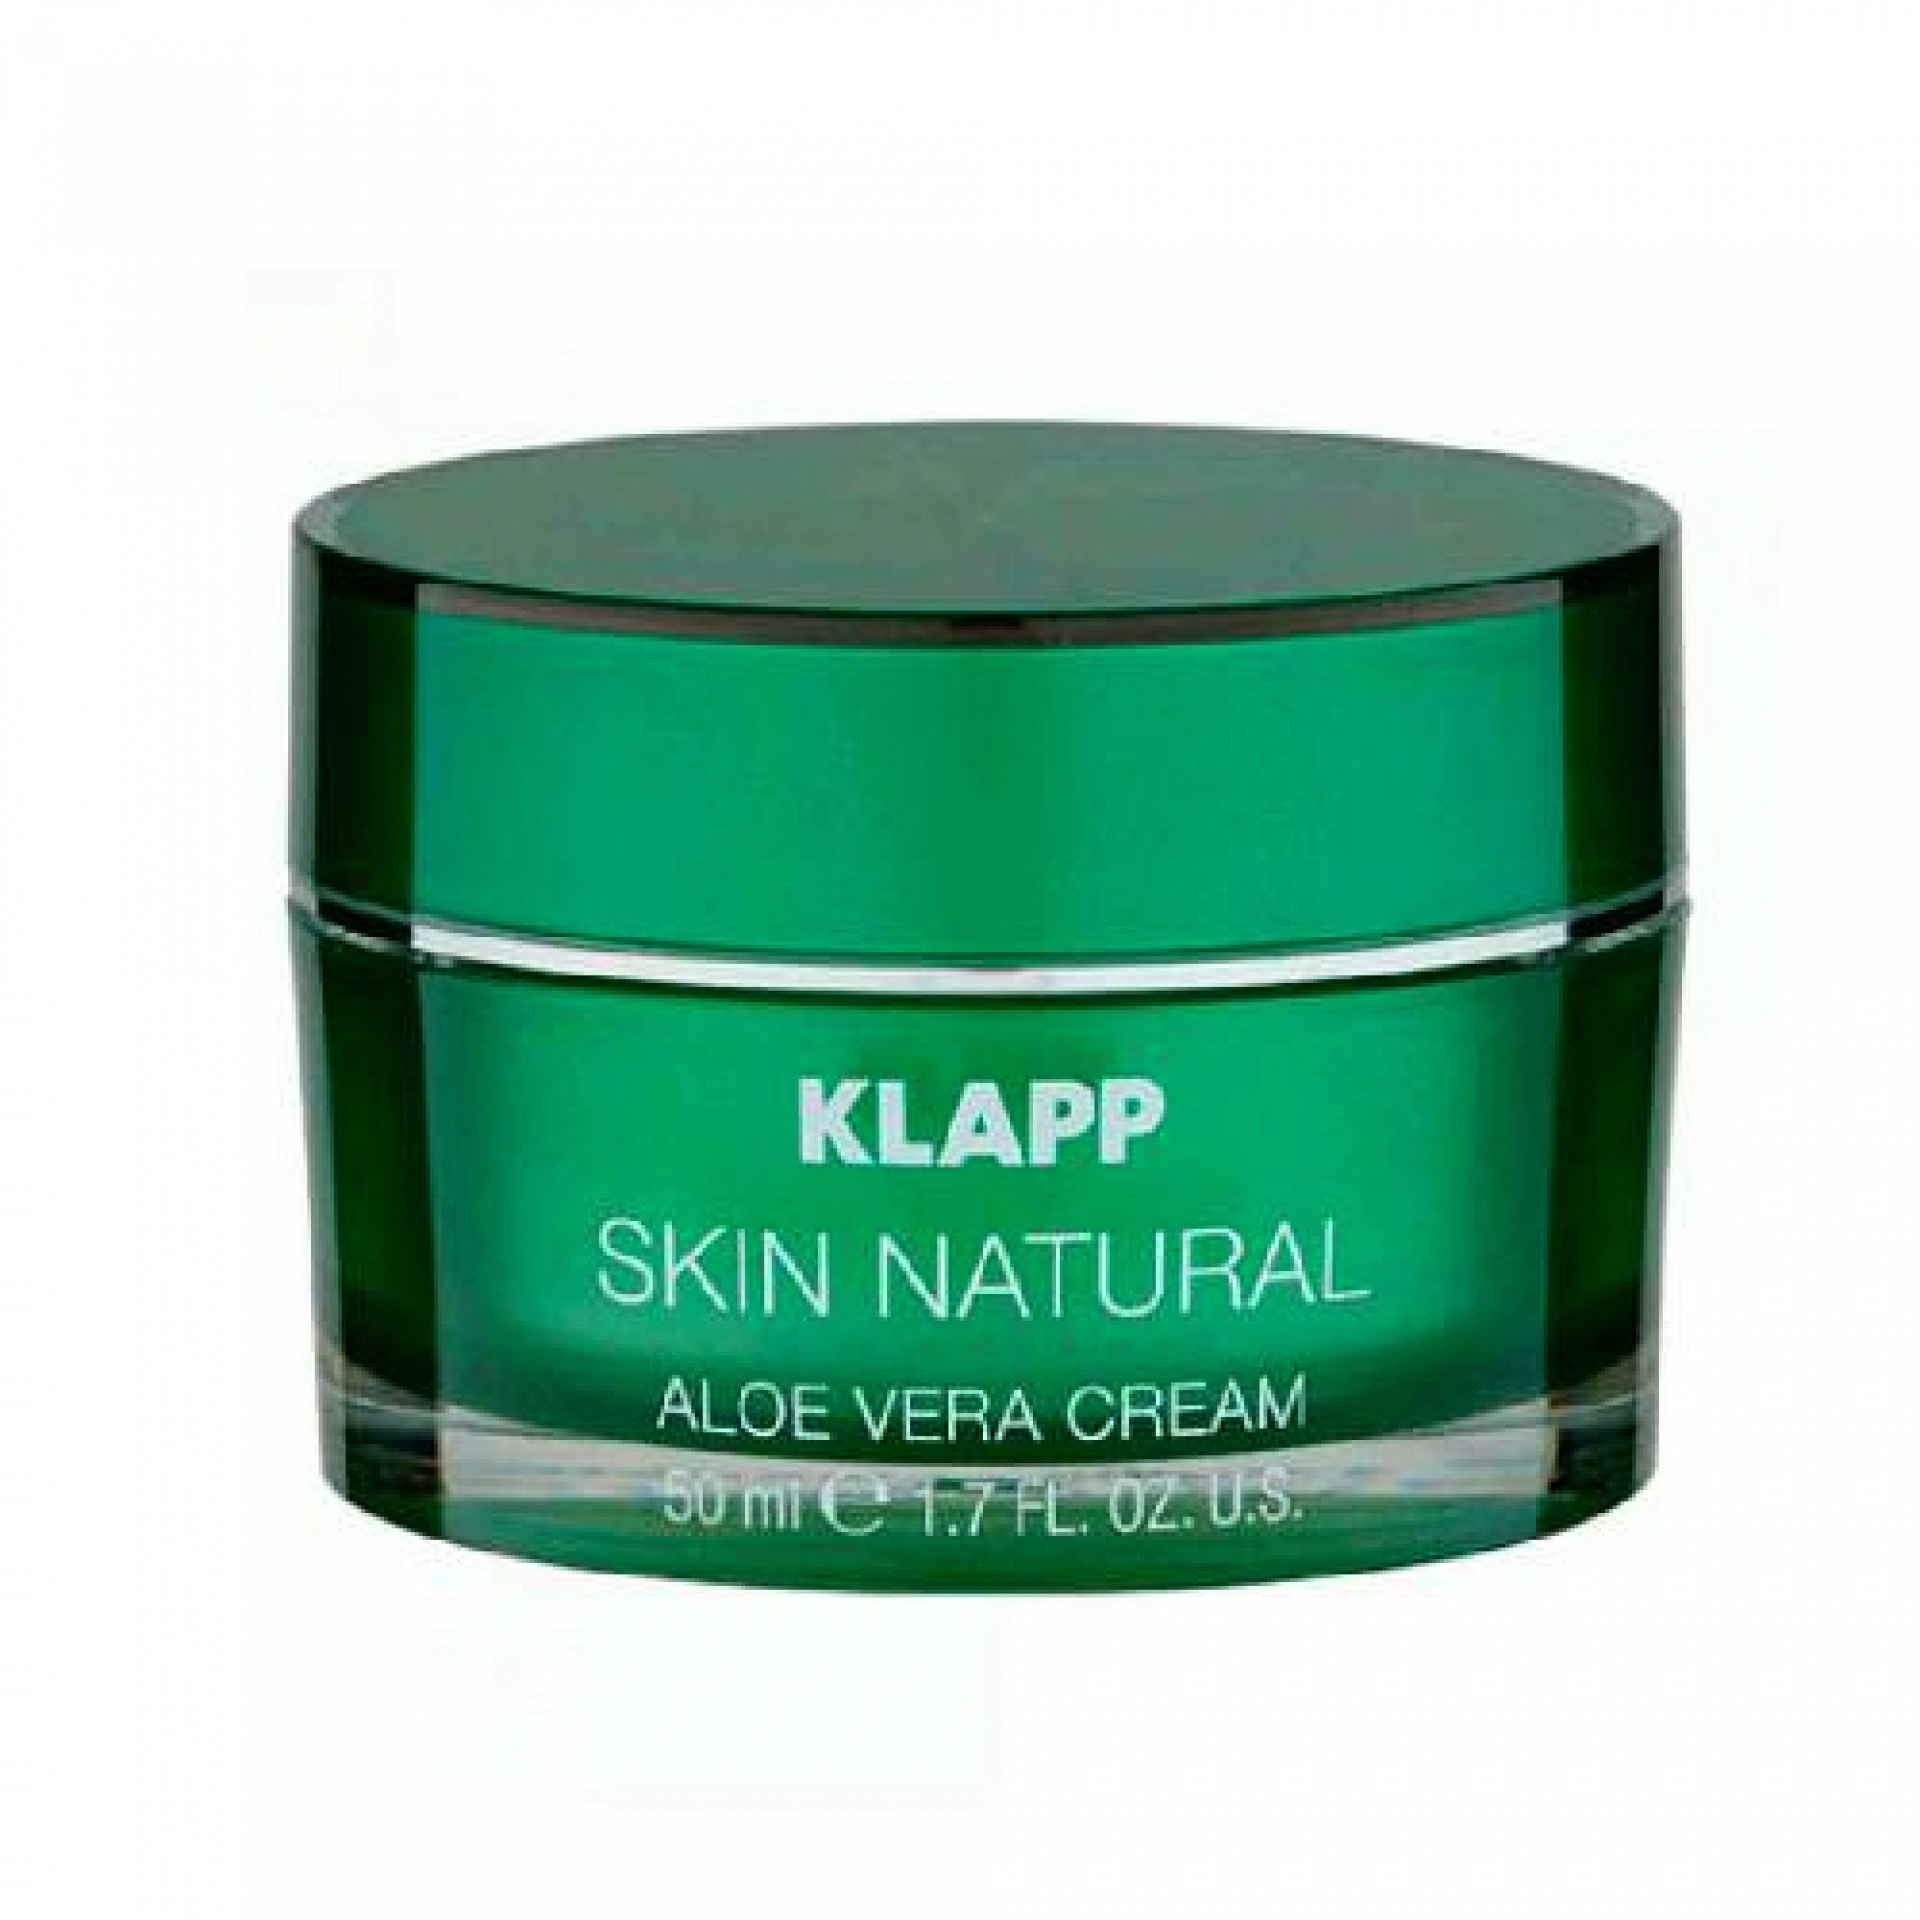 Aloe Vera Cream | Crema Hidratante de Aloe Vera 50ml - Skin Natural - Klapp ®